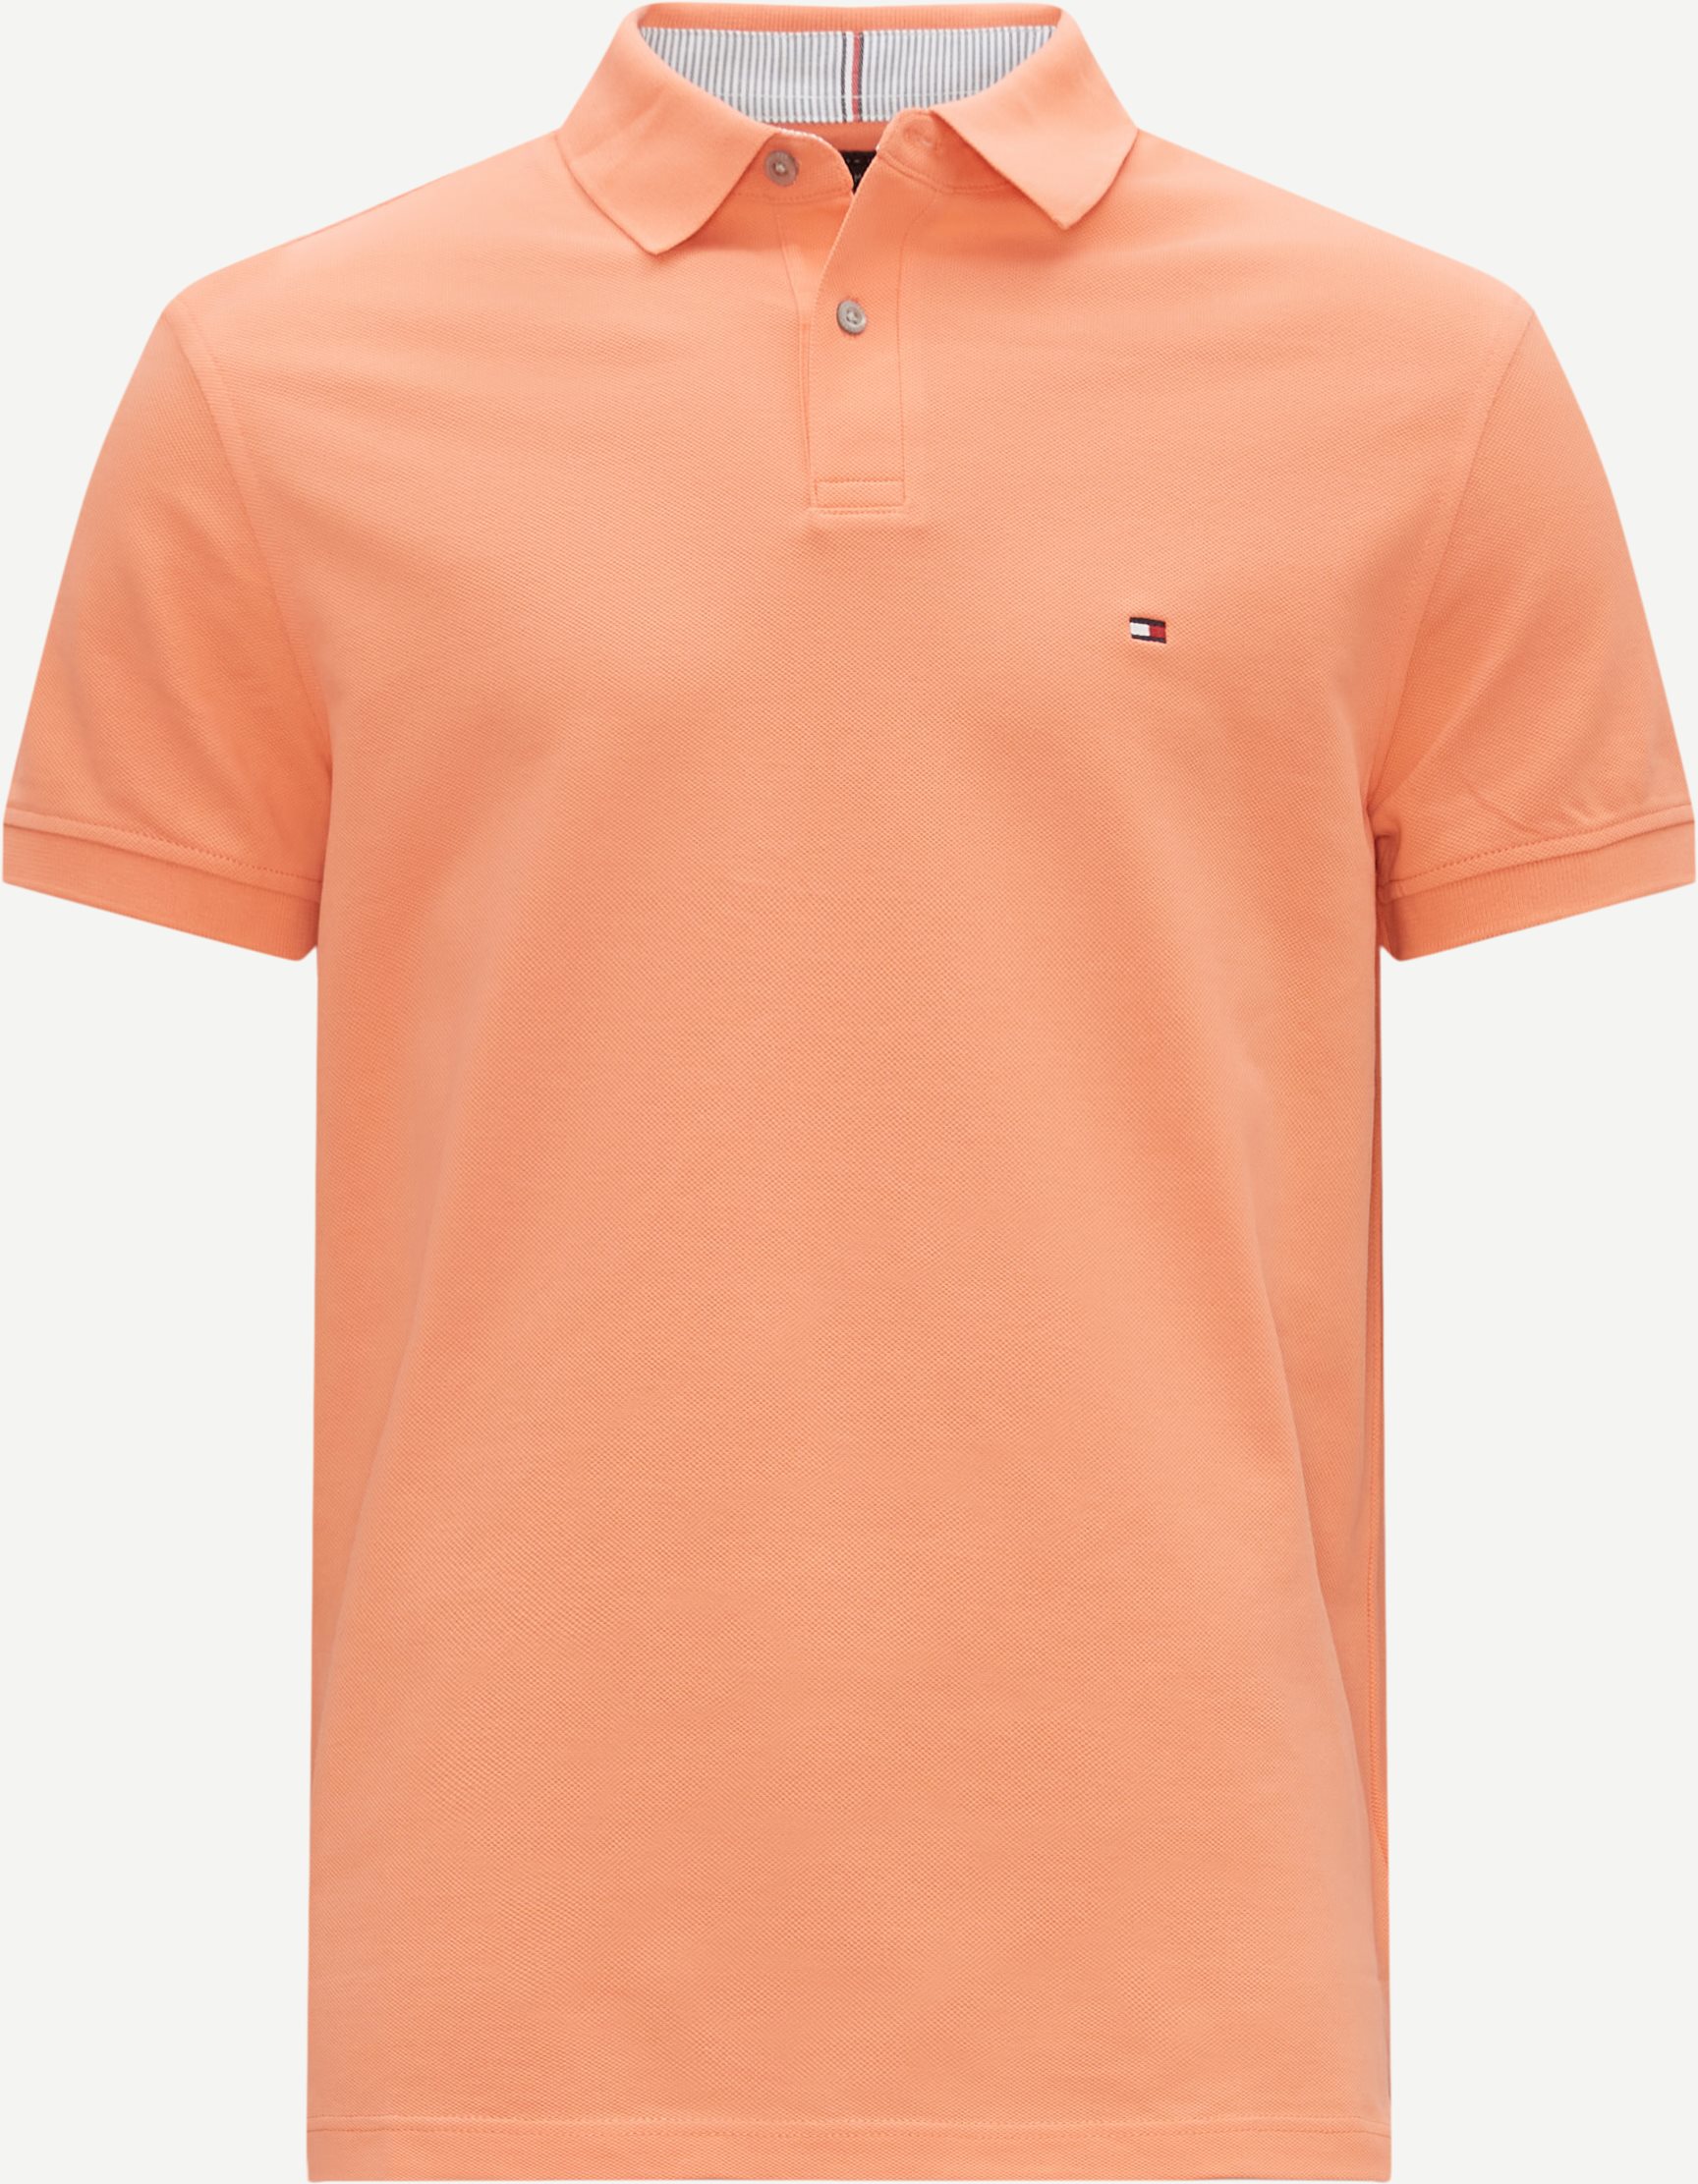 Tommy Hilfiger T-shirts 17770 1985 REGULAR POLO SS23 Orange